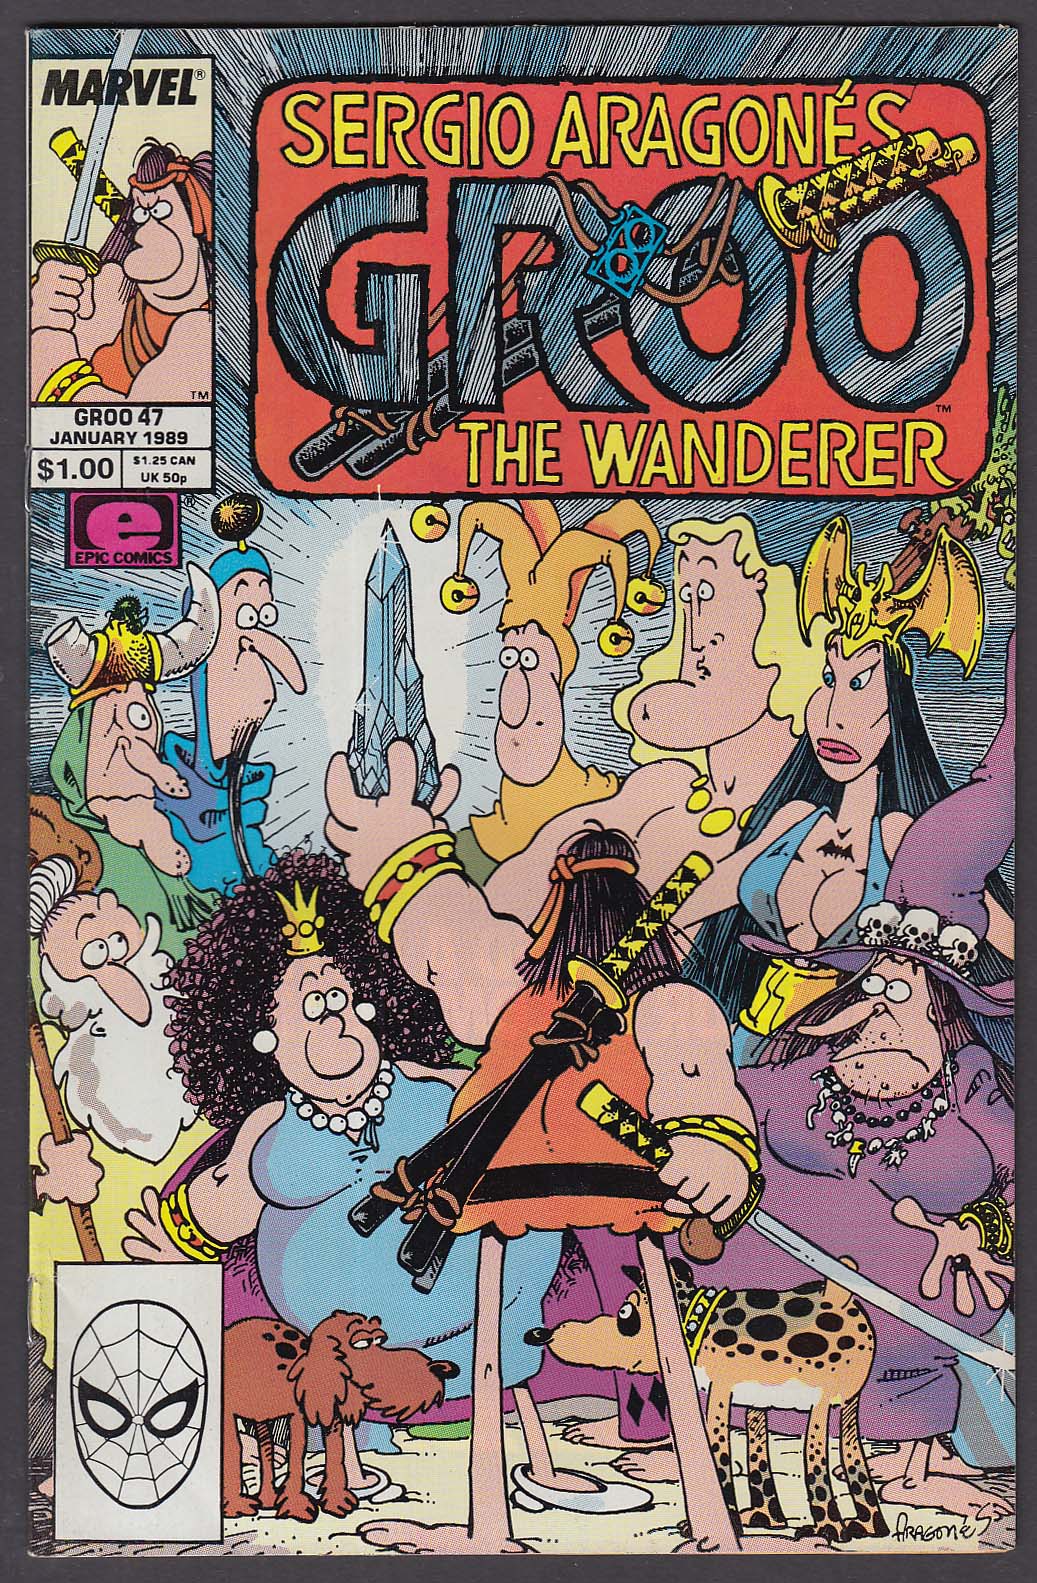 Image for Sergio Aragones GROO the WANDERER #47 Marvel comic book 1 1989.